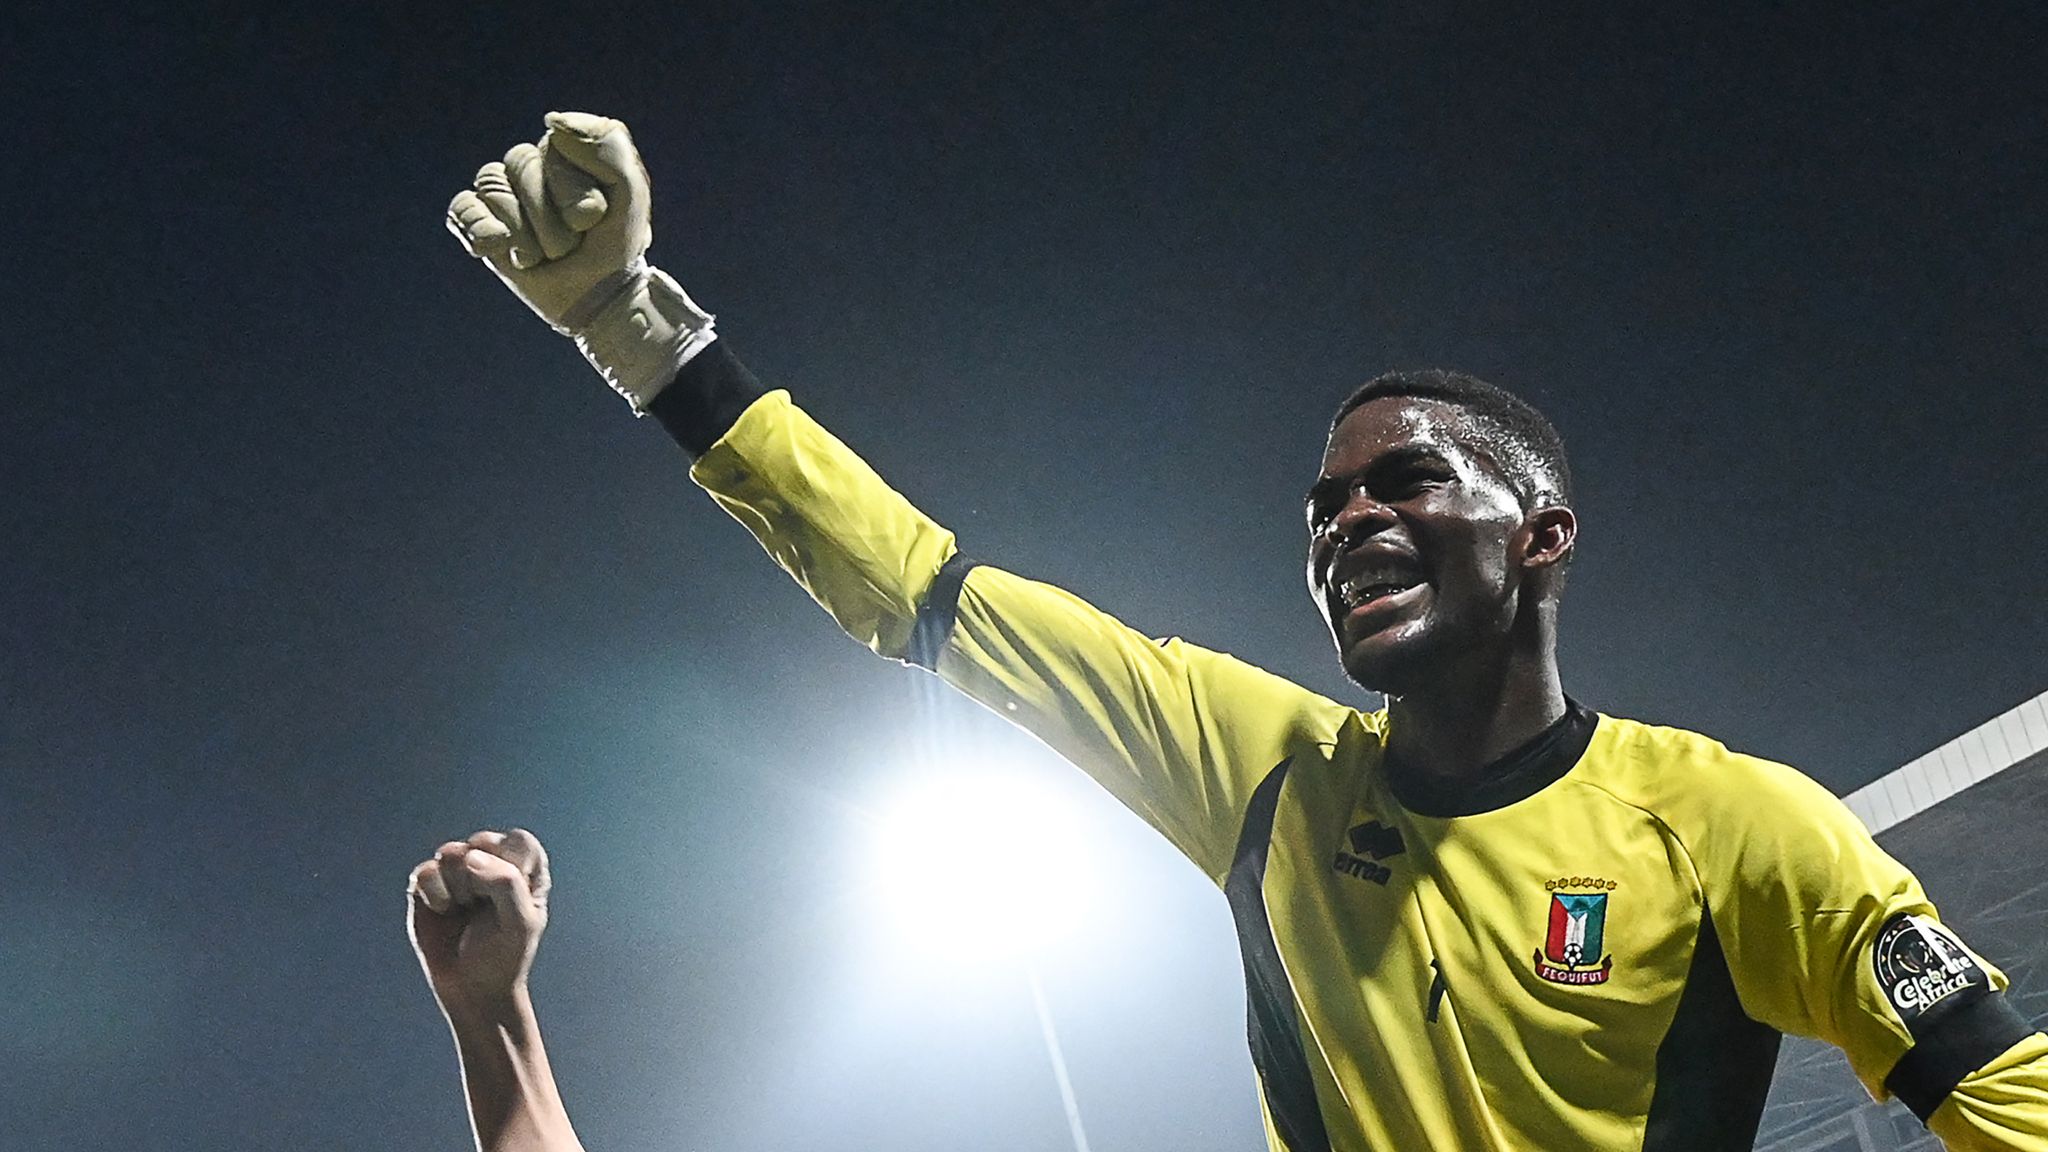 Mali 0 - 0 Equatorial Guinea - Match Report & Highlights